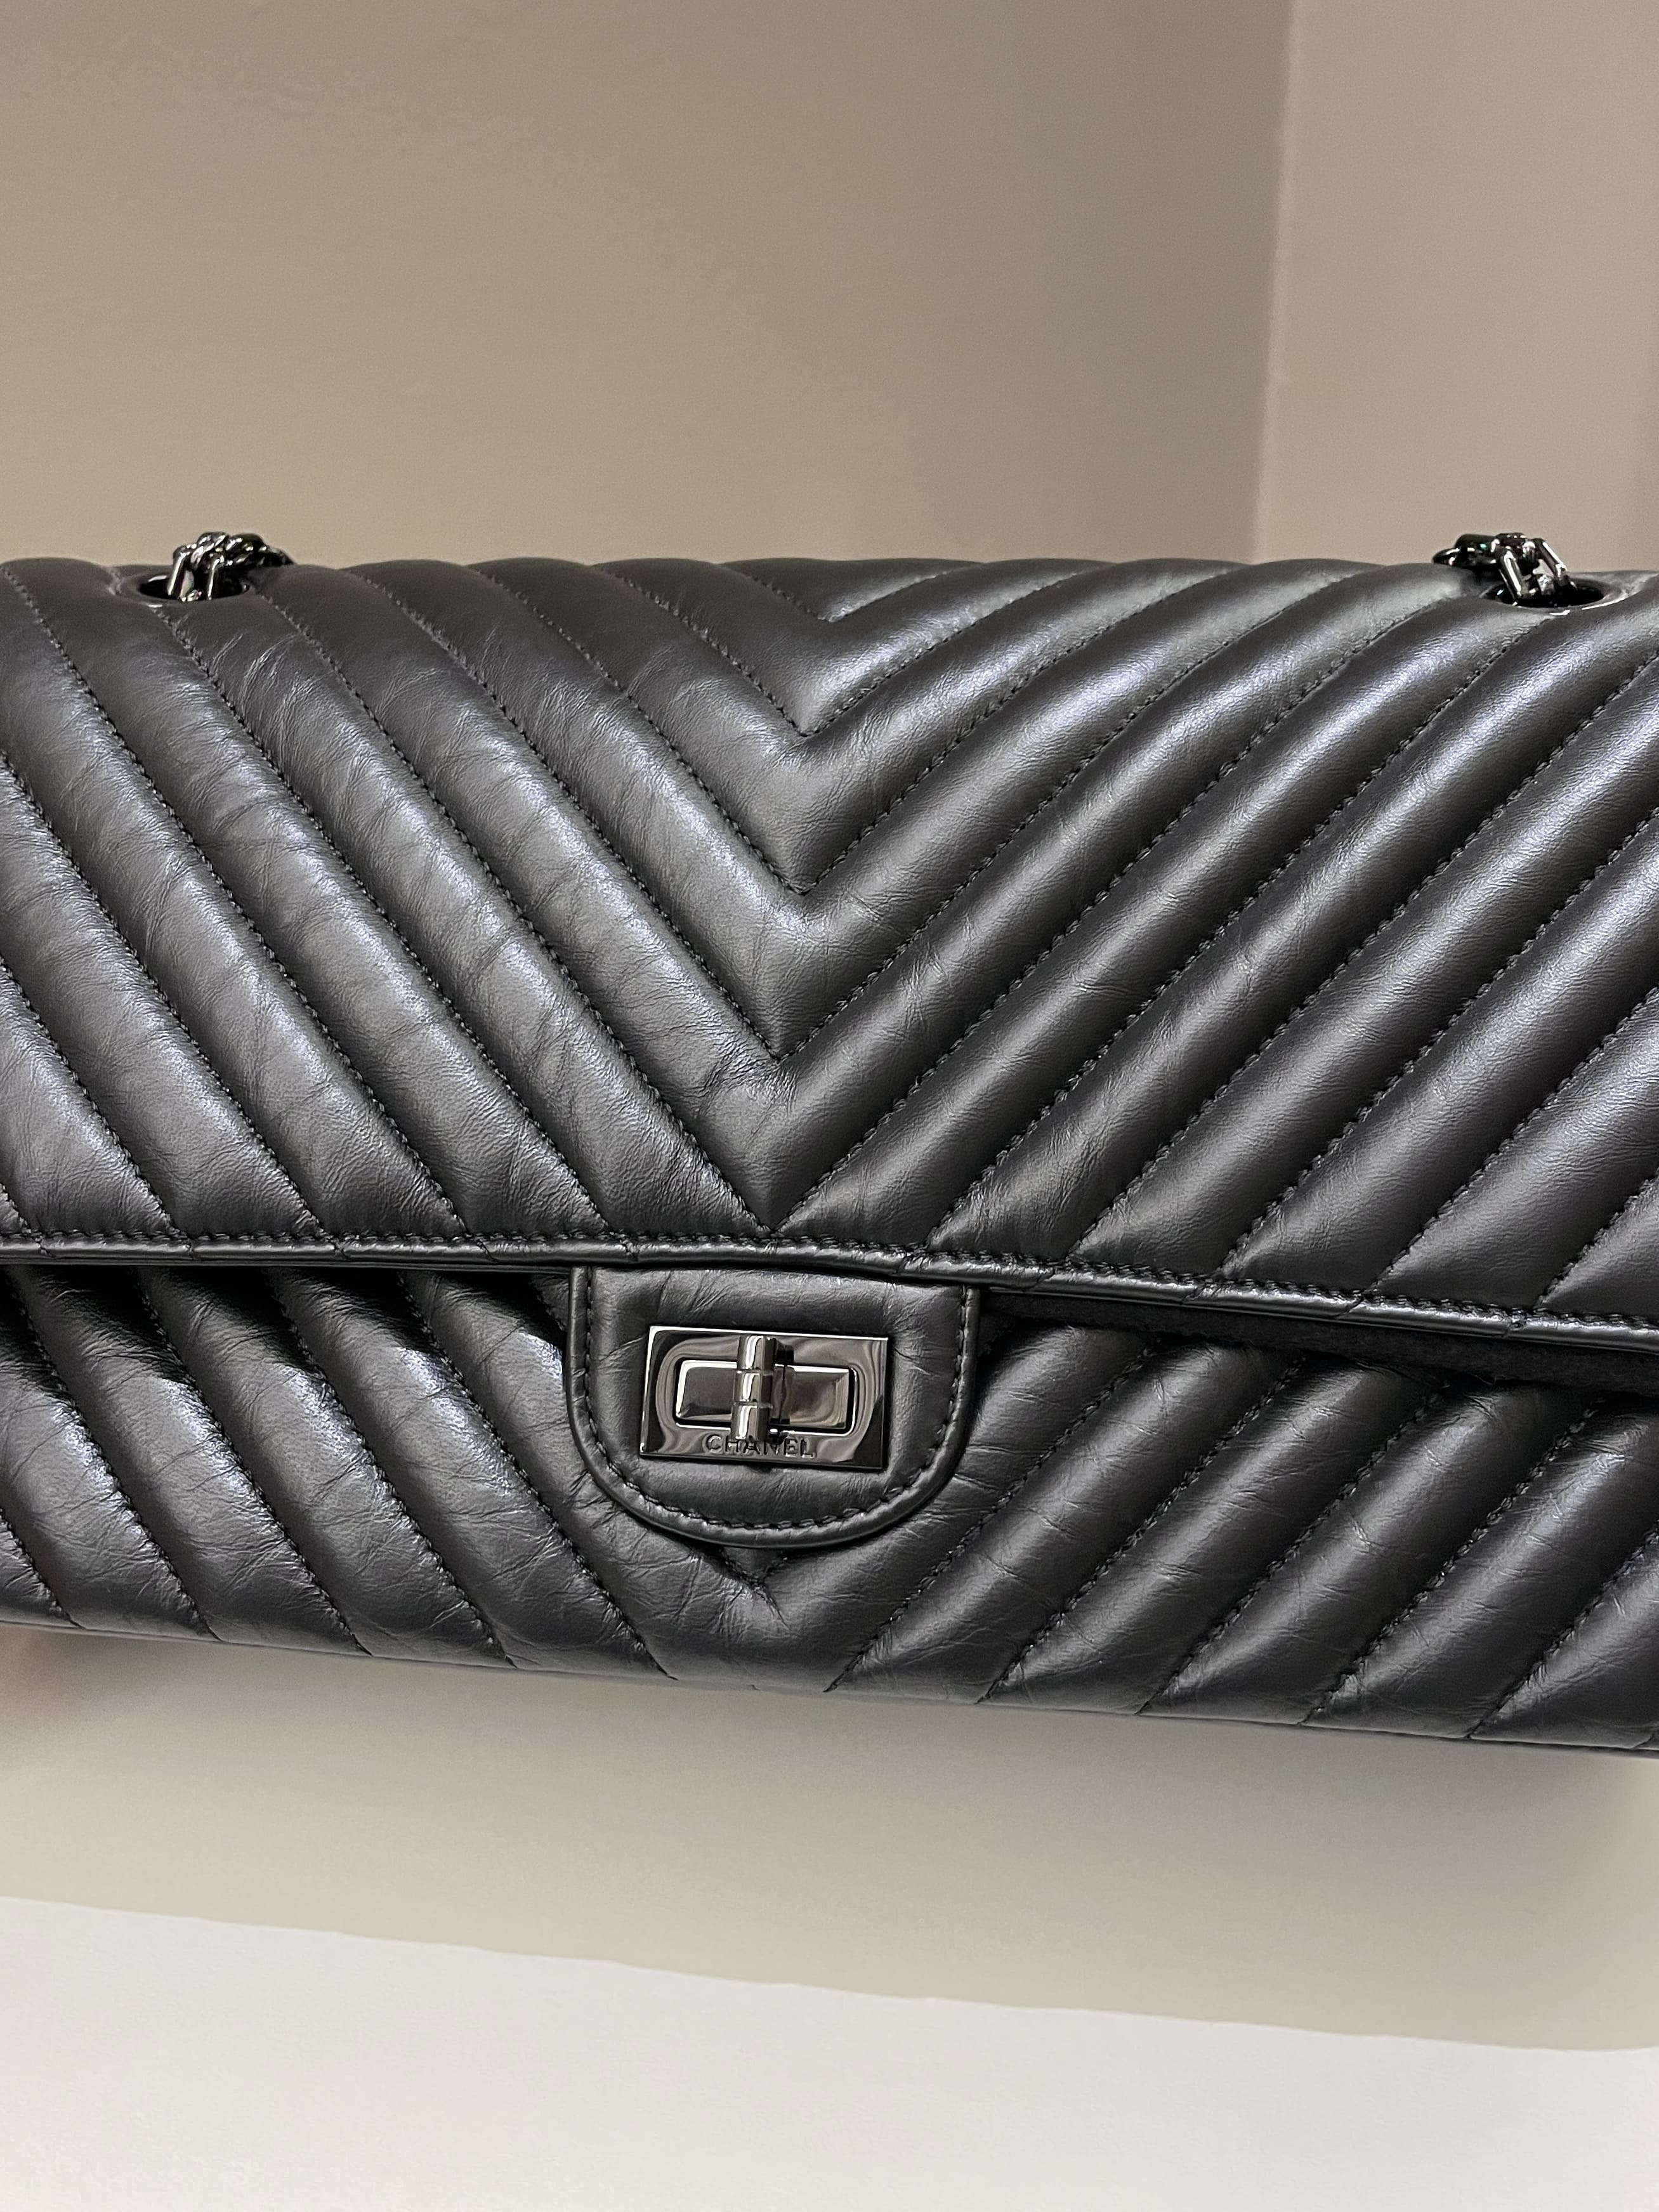 Chanel So Black Reissue 2.55 Flap Bag Chevron Aged Calfskin 225